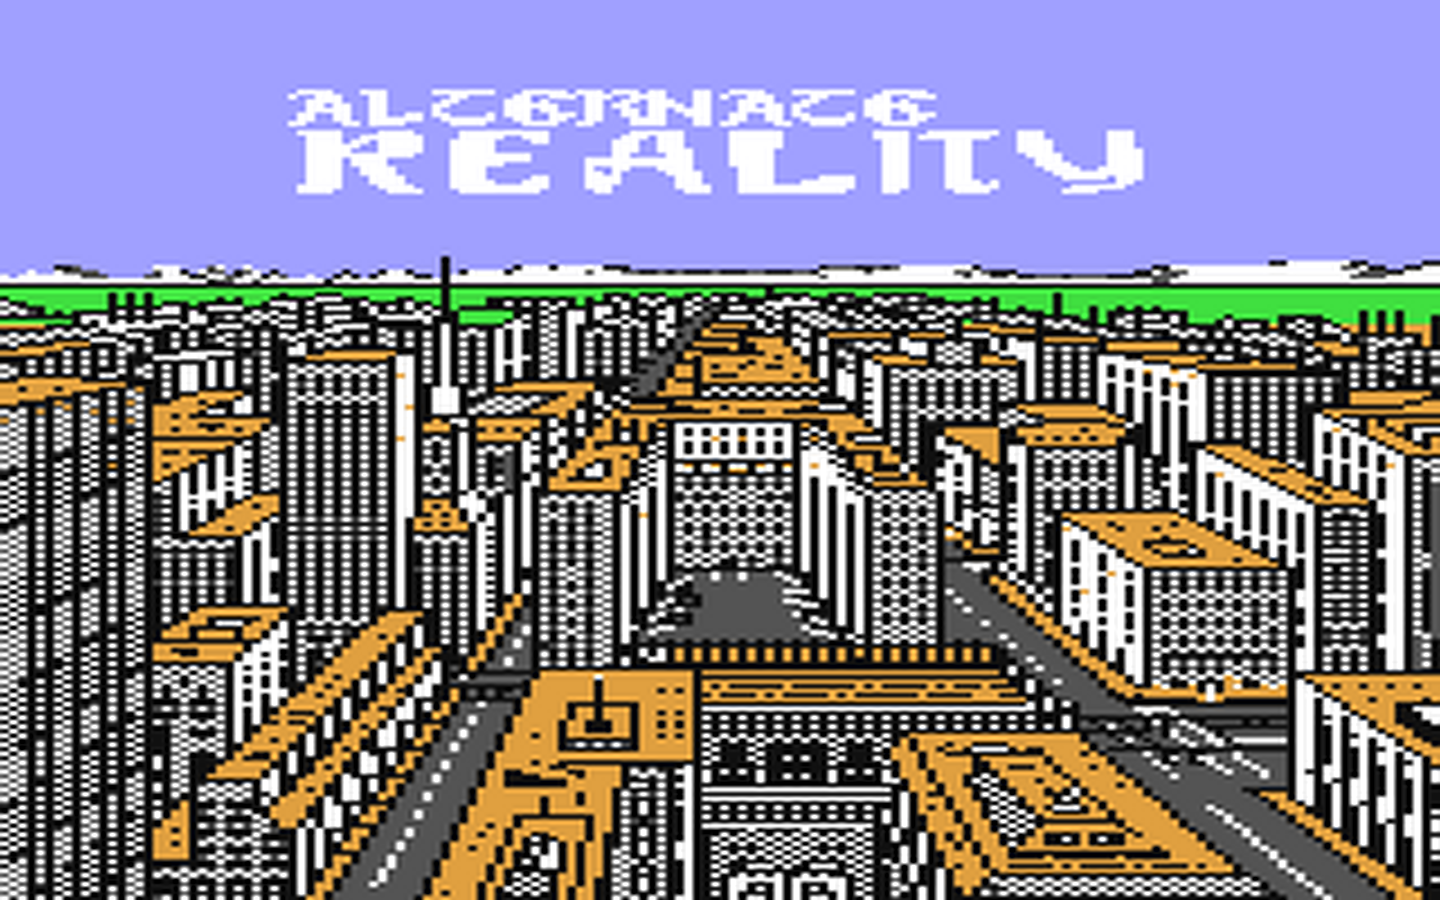 C64 GameBase Alternate_Reality_-_The_City Datasoft 1986